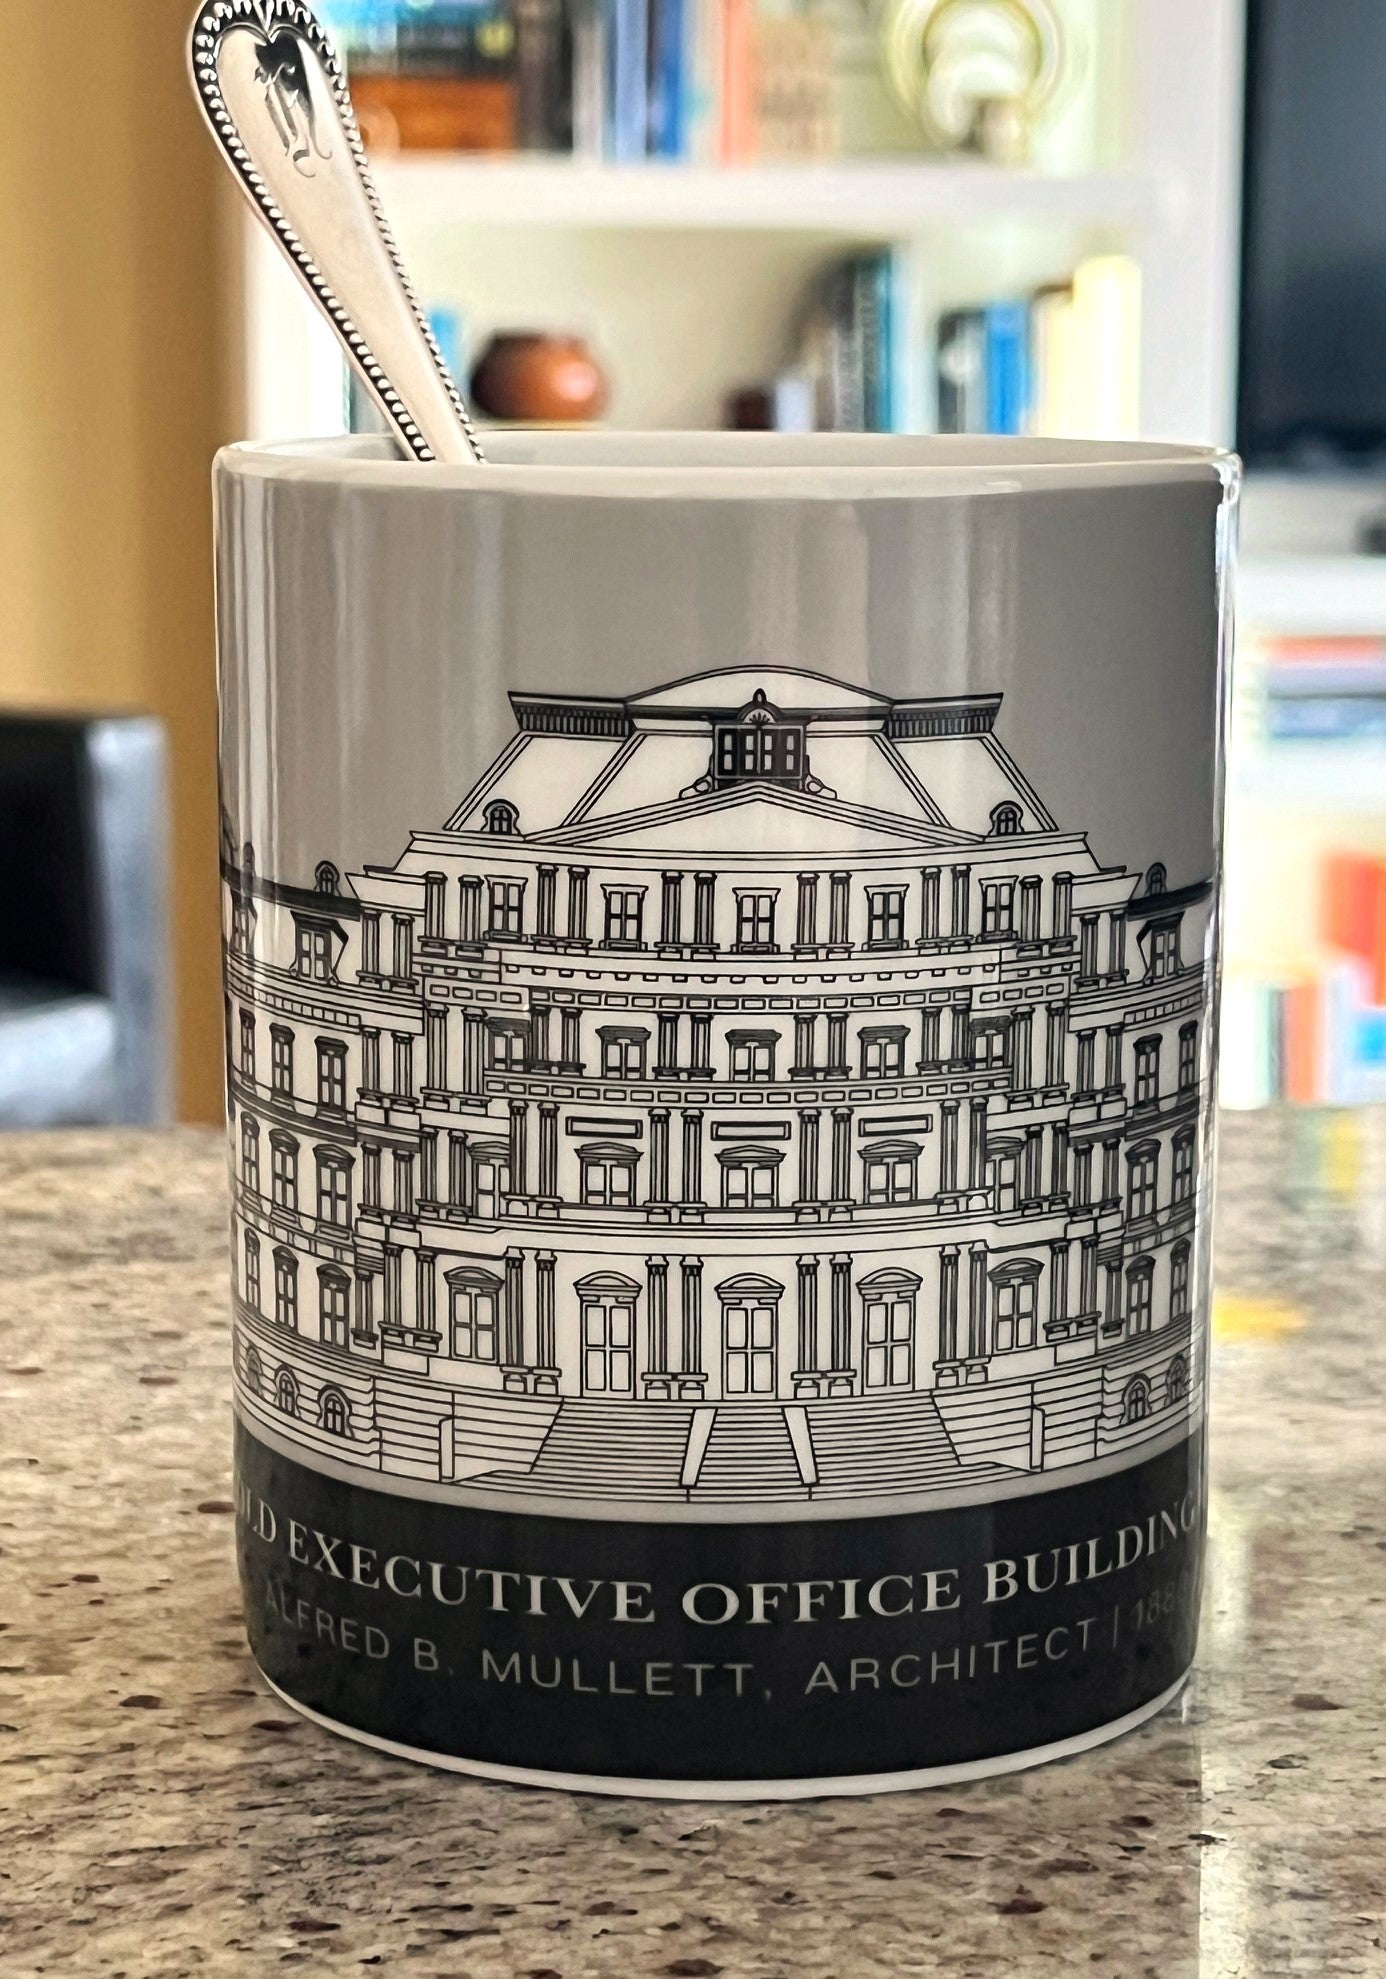 "New Piero" Old Executive Office Building Ceramic Mug